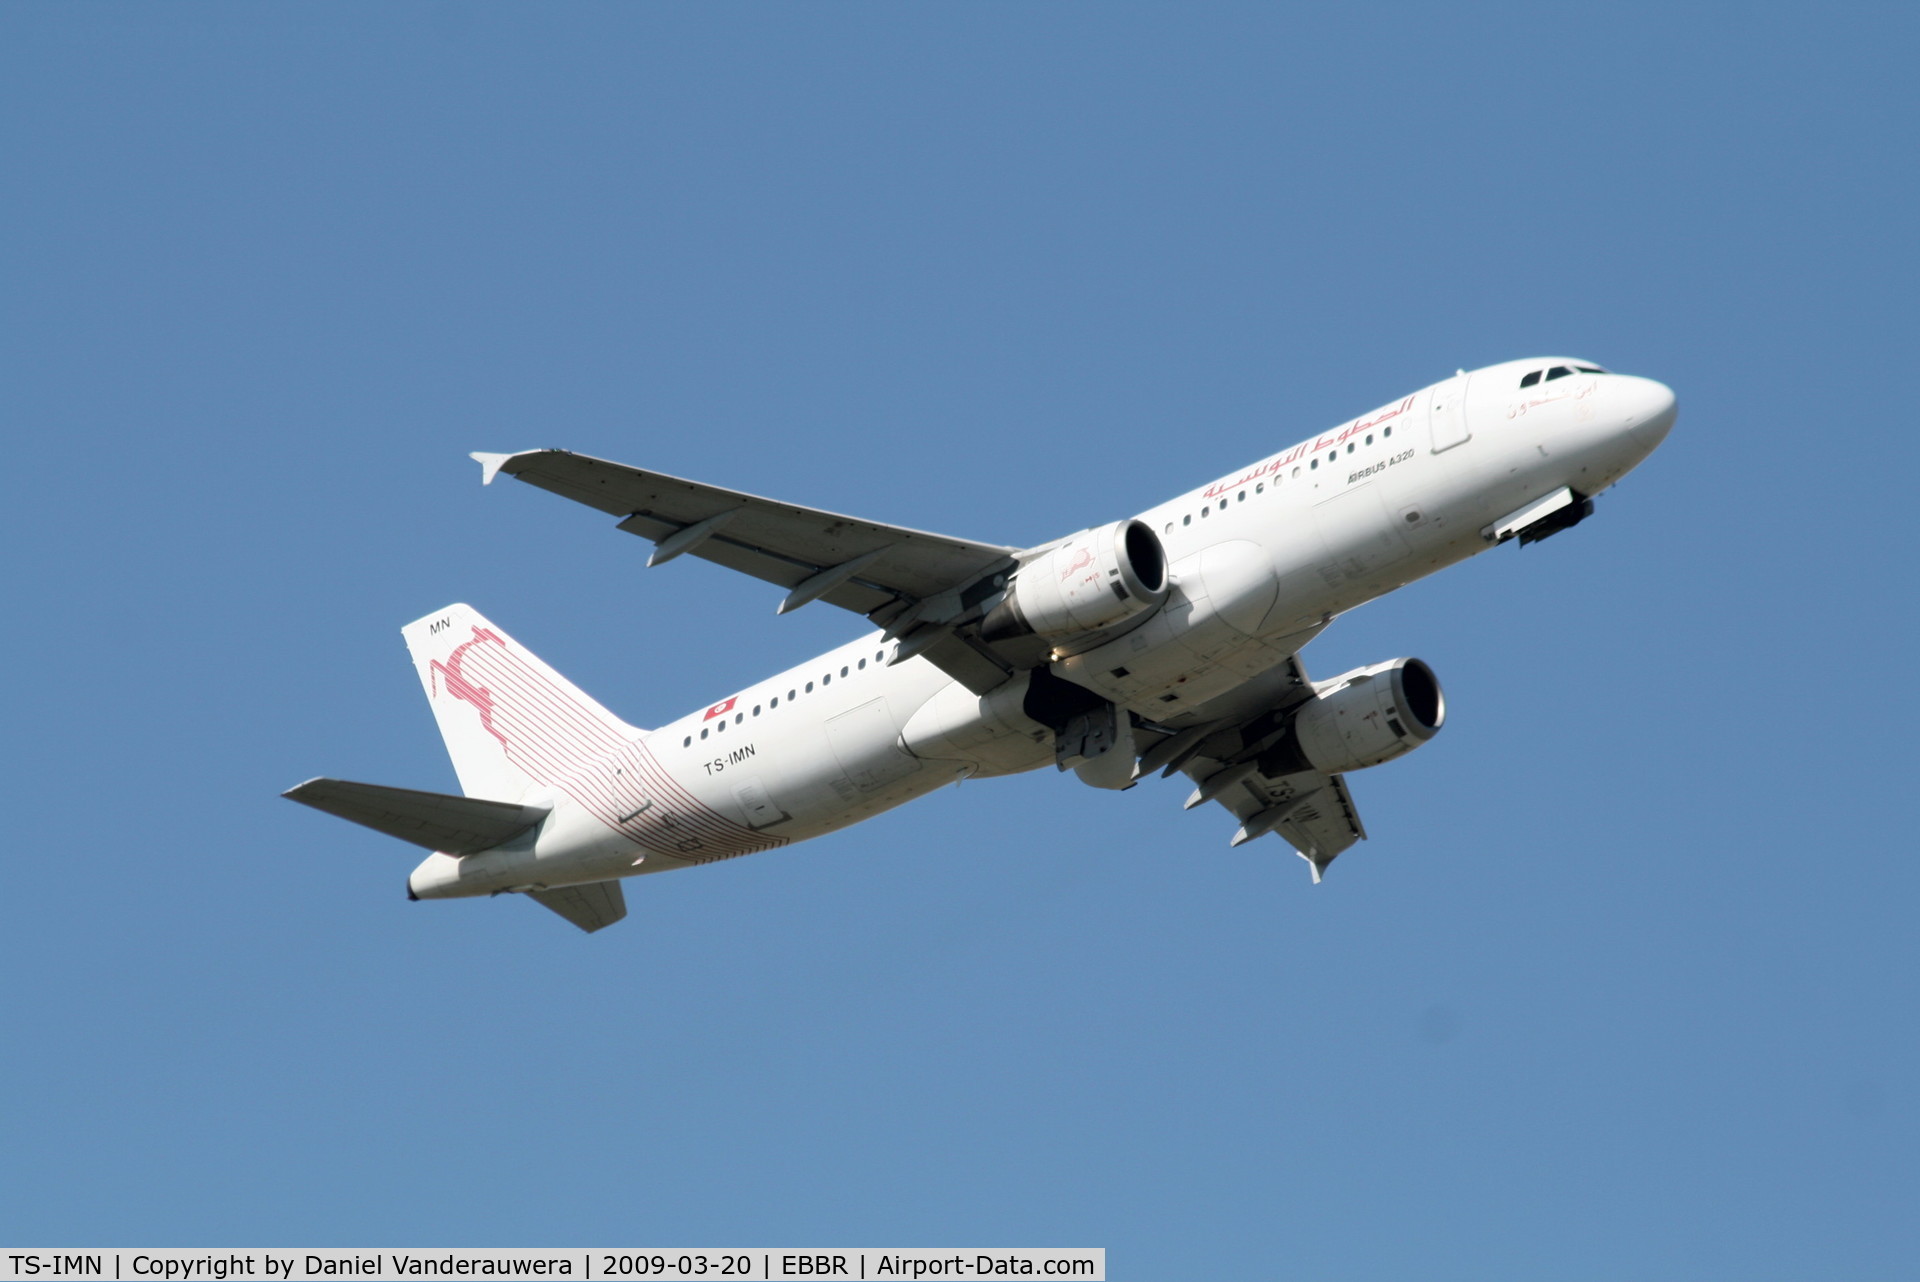 TS-IMN, 2000 Airbus A320-211 C/N 1187, Flight TU789 is taking off from RWY 07R